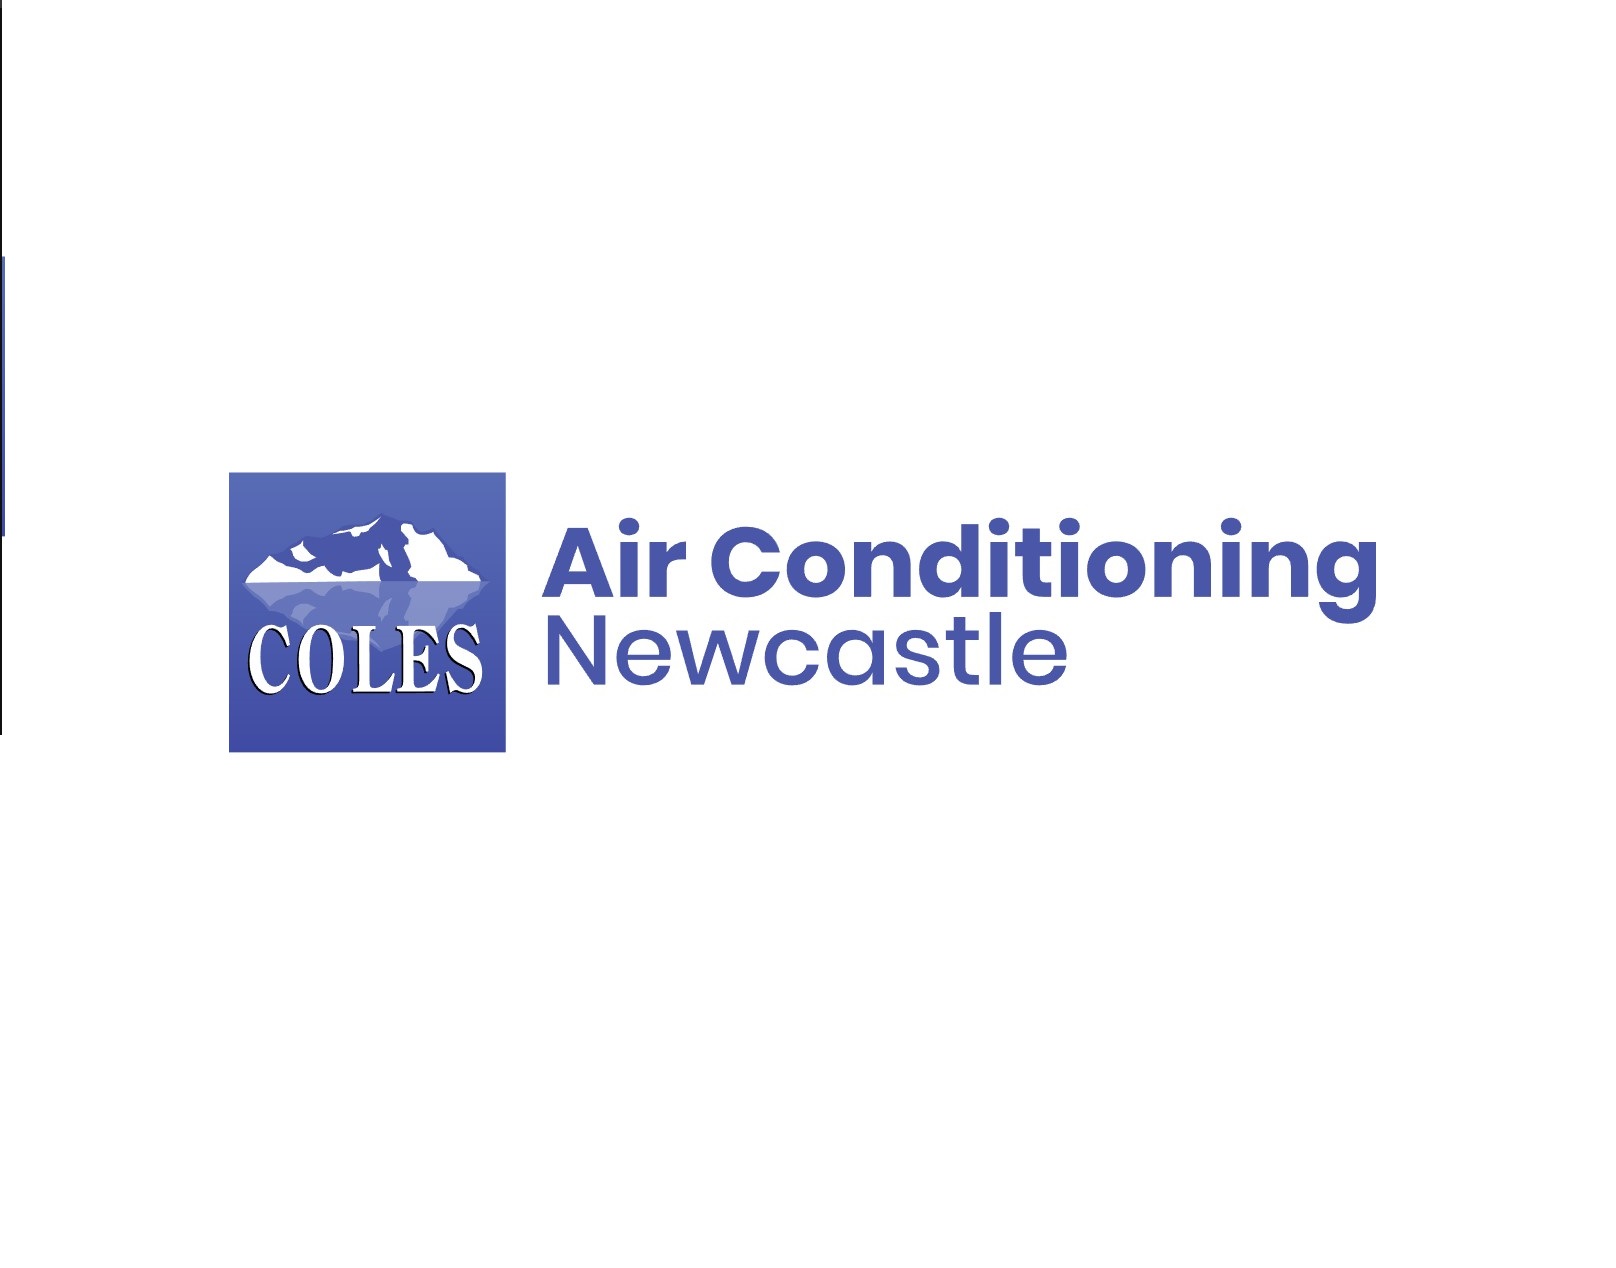 Coles Air Conditioning